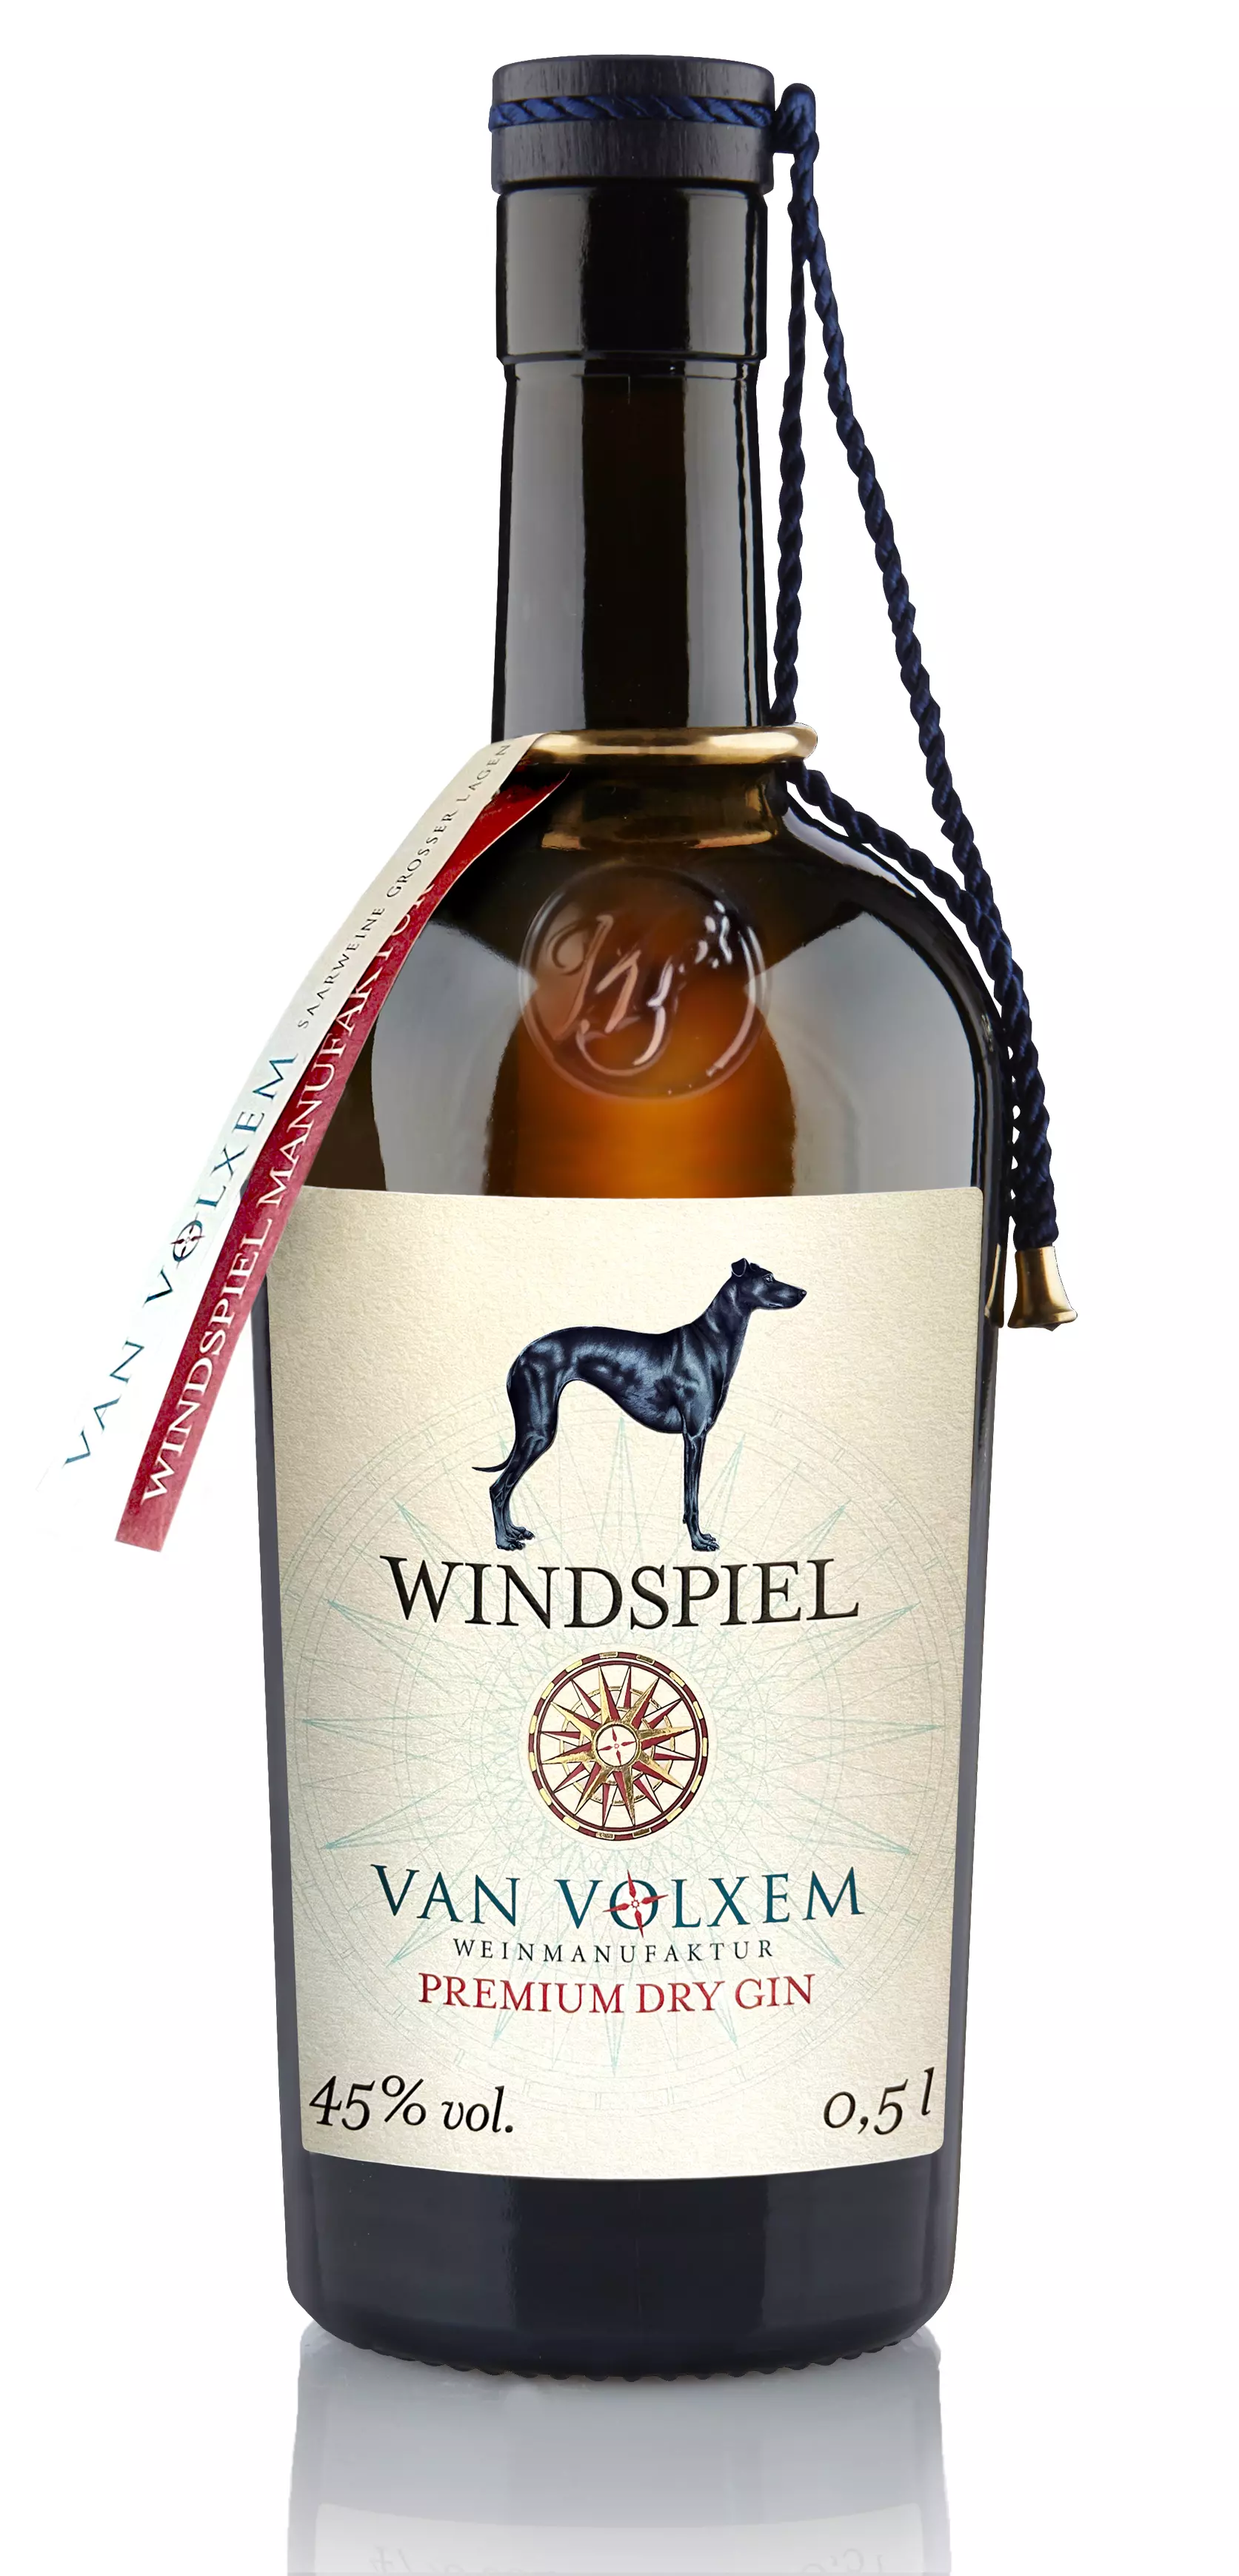 Windspiel Premium Dry Gin Van Volxem 45% 0,5l